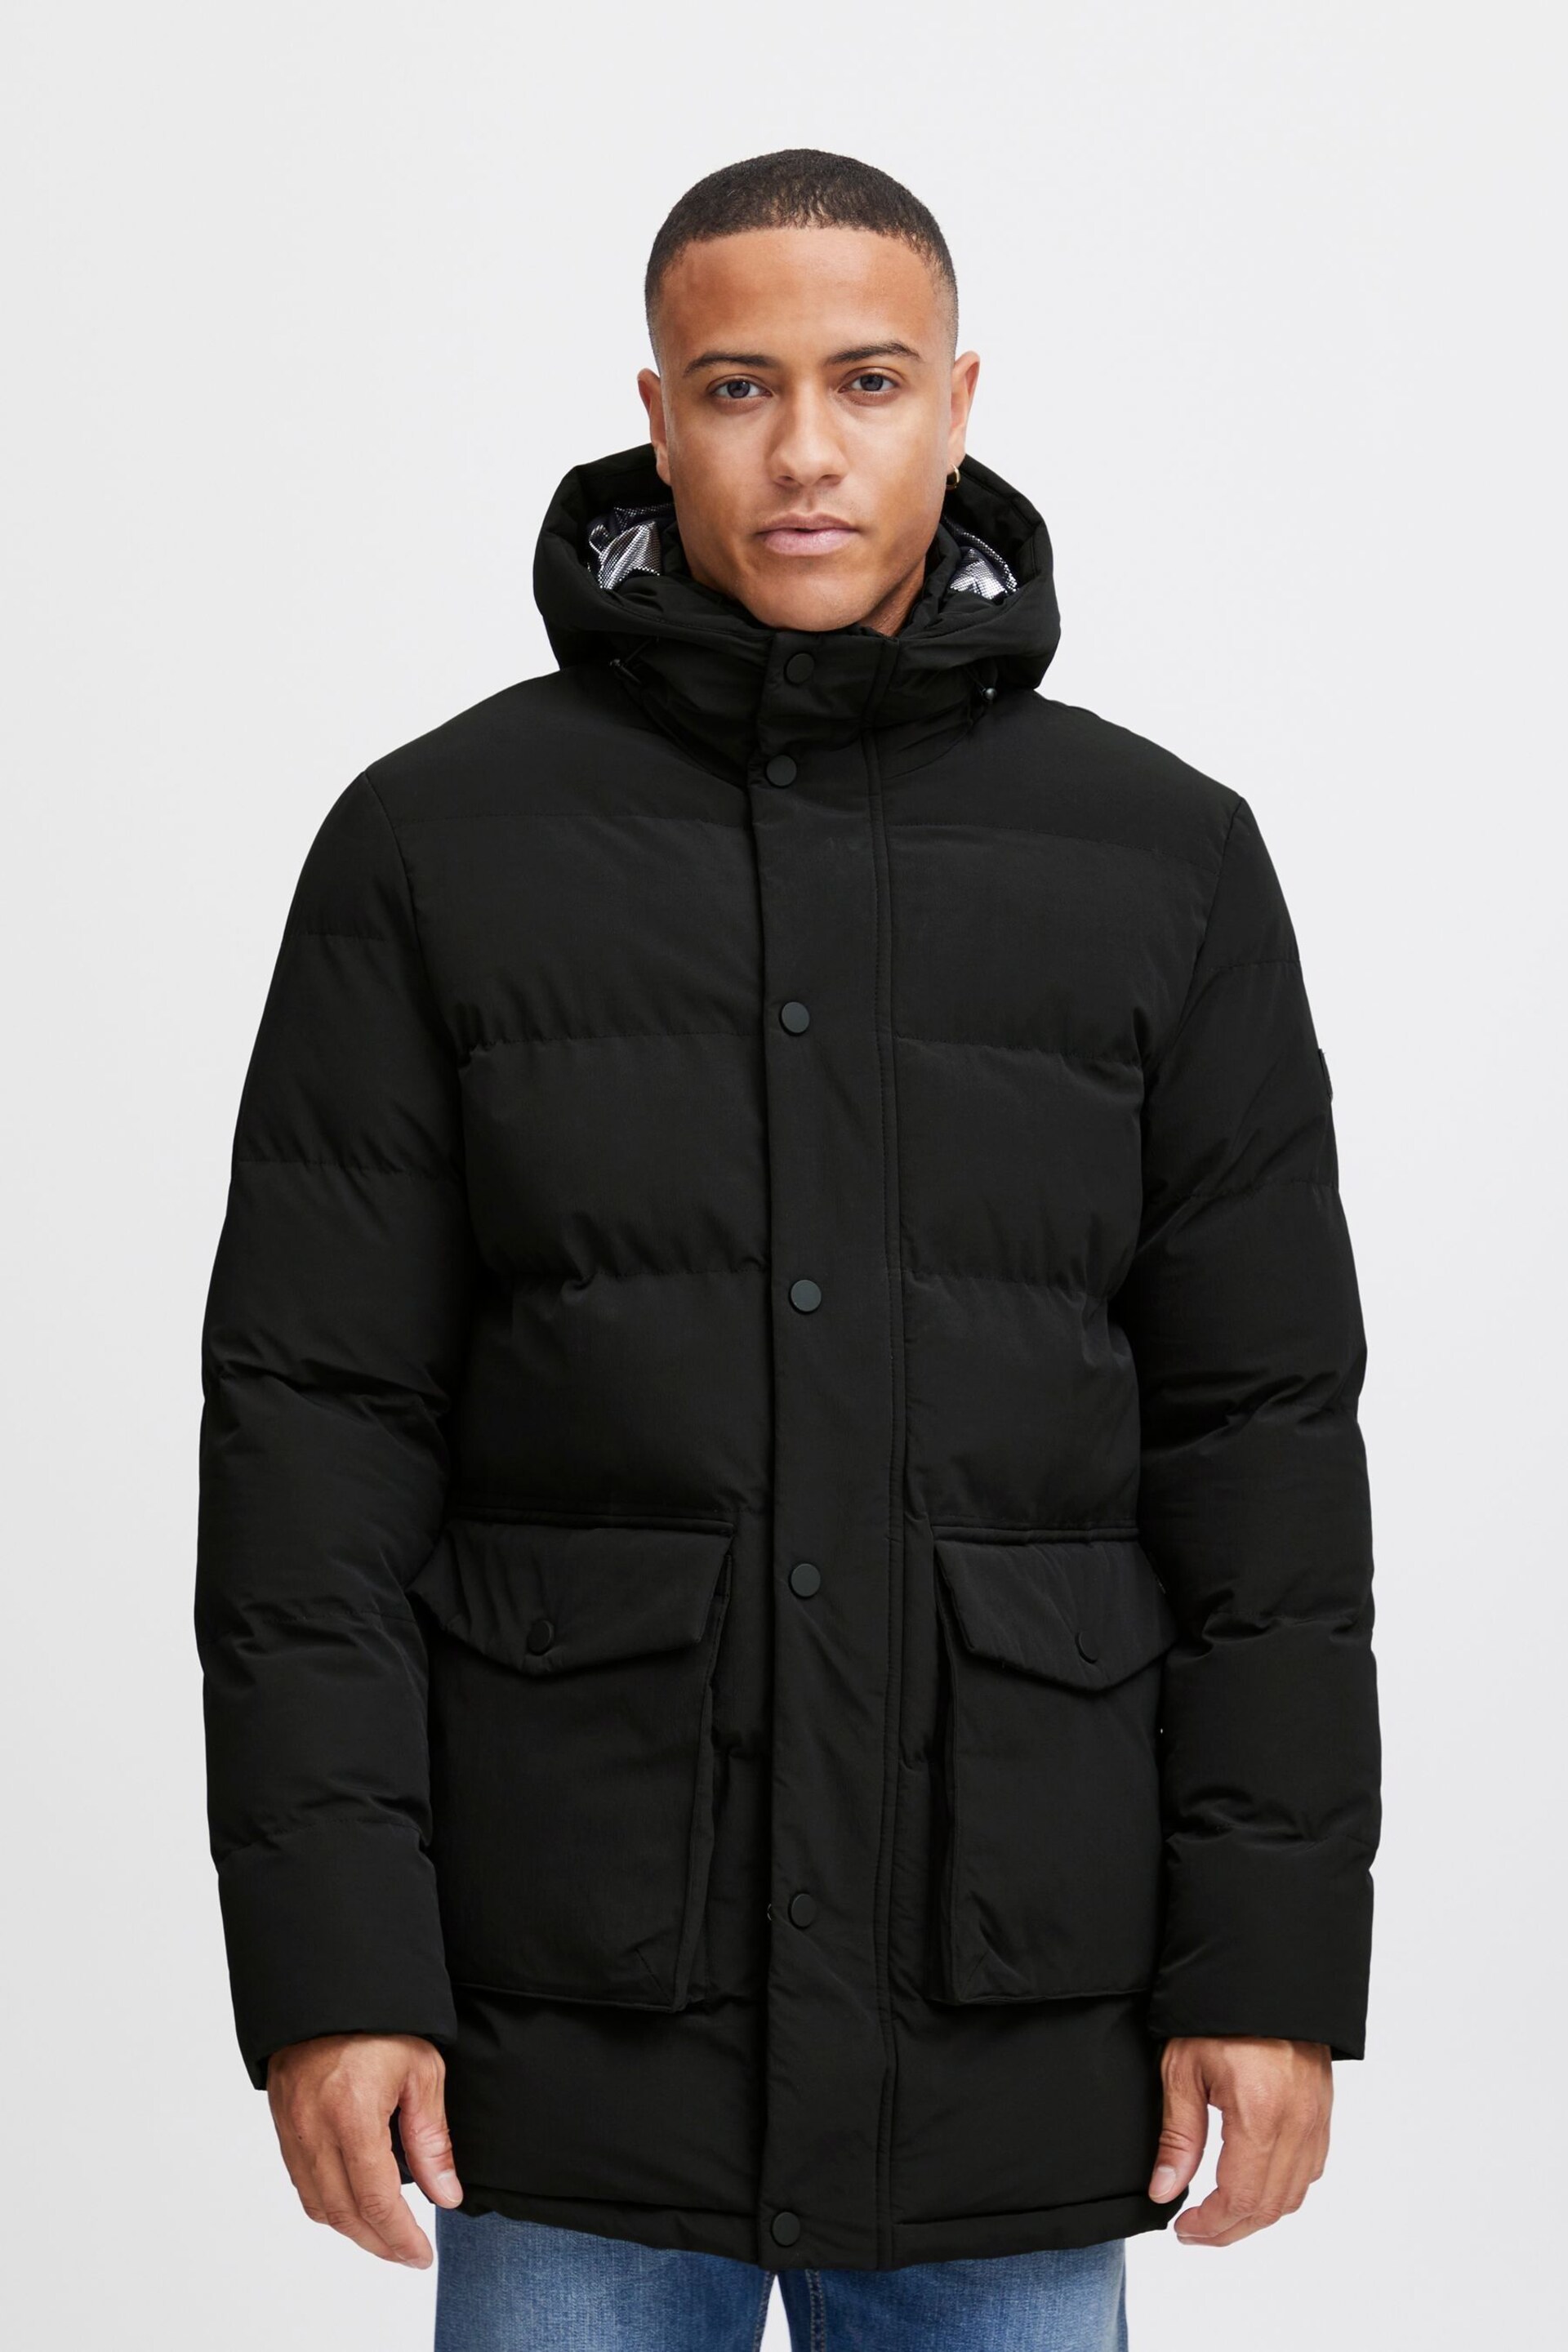 Blend Black Quilted Parka Jacket with Hood - Image 1 of 5